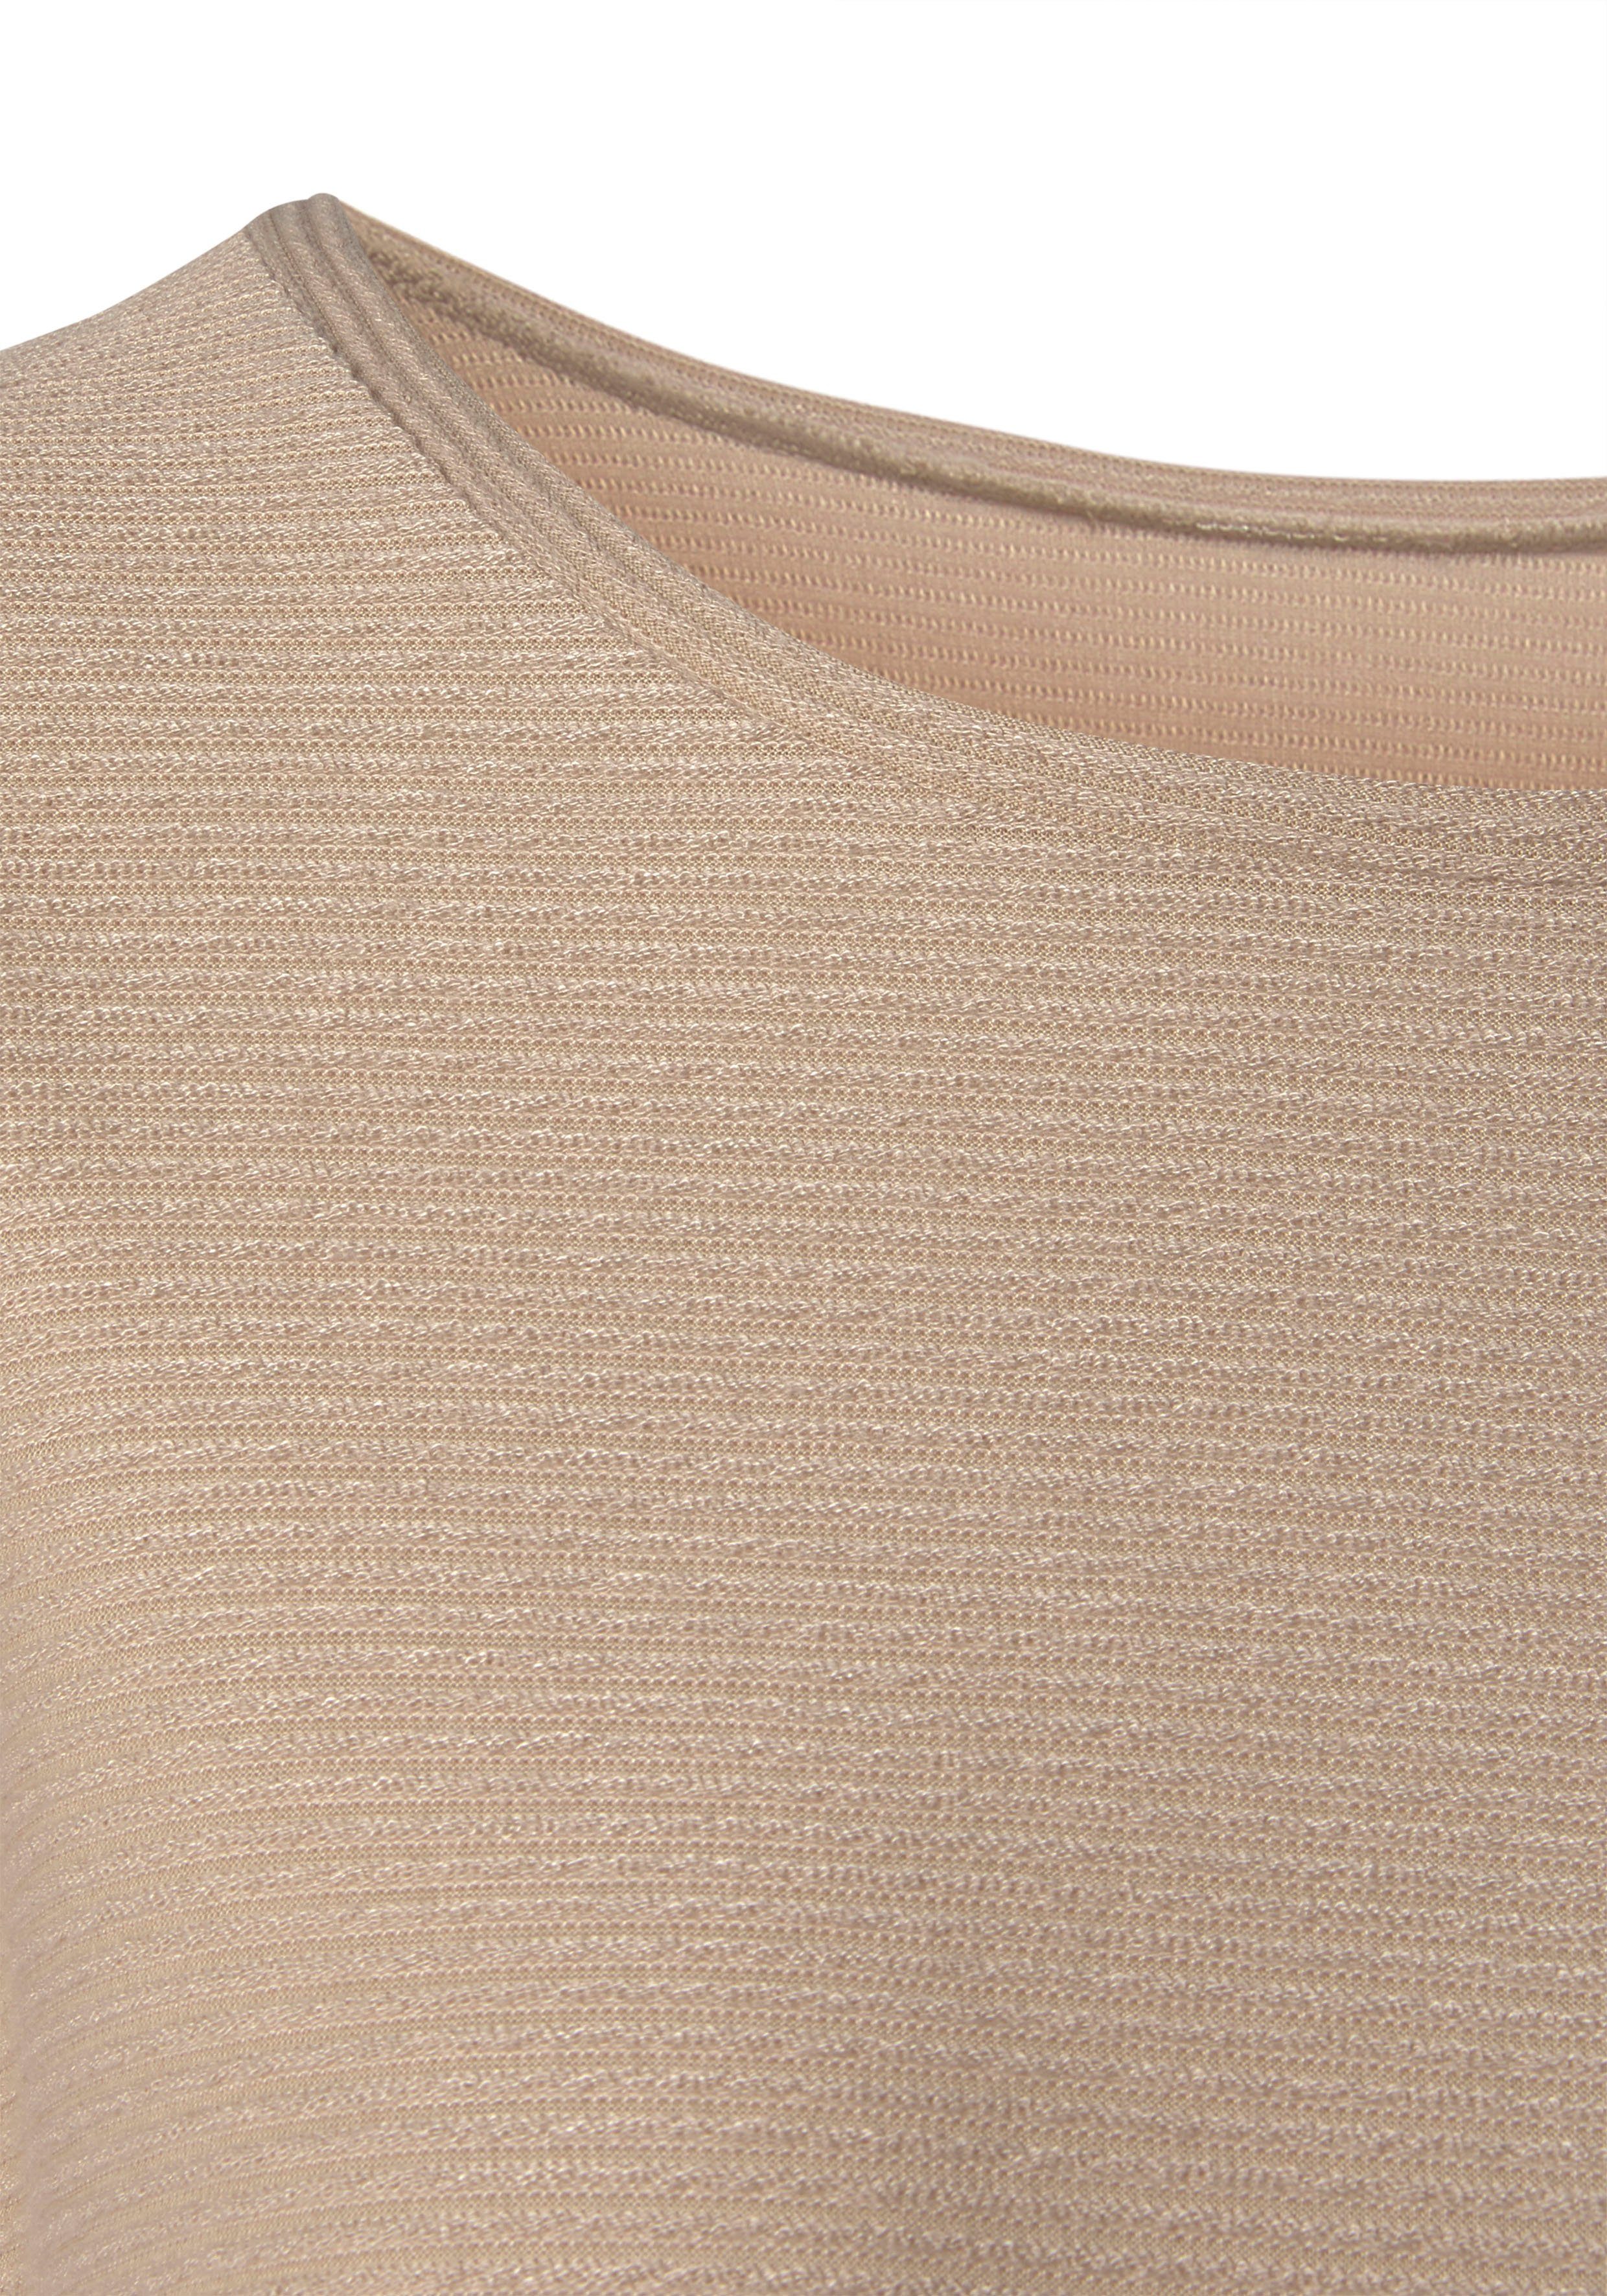 3/4-Arm-Shirt aus Vivance sand Qualität strukturierter